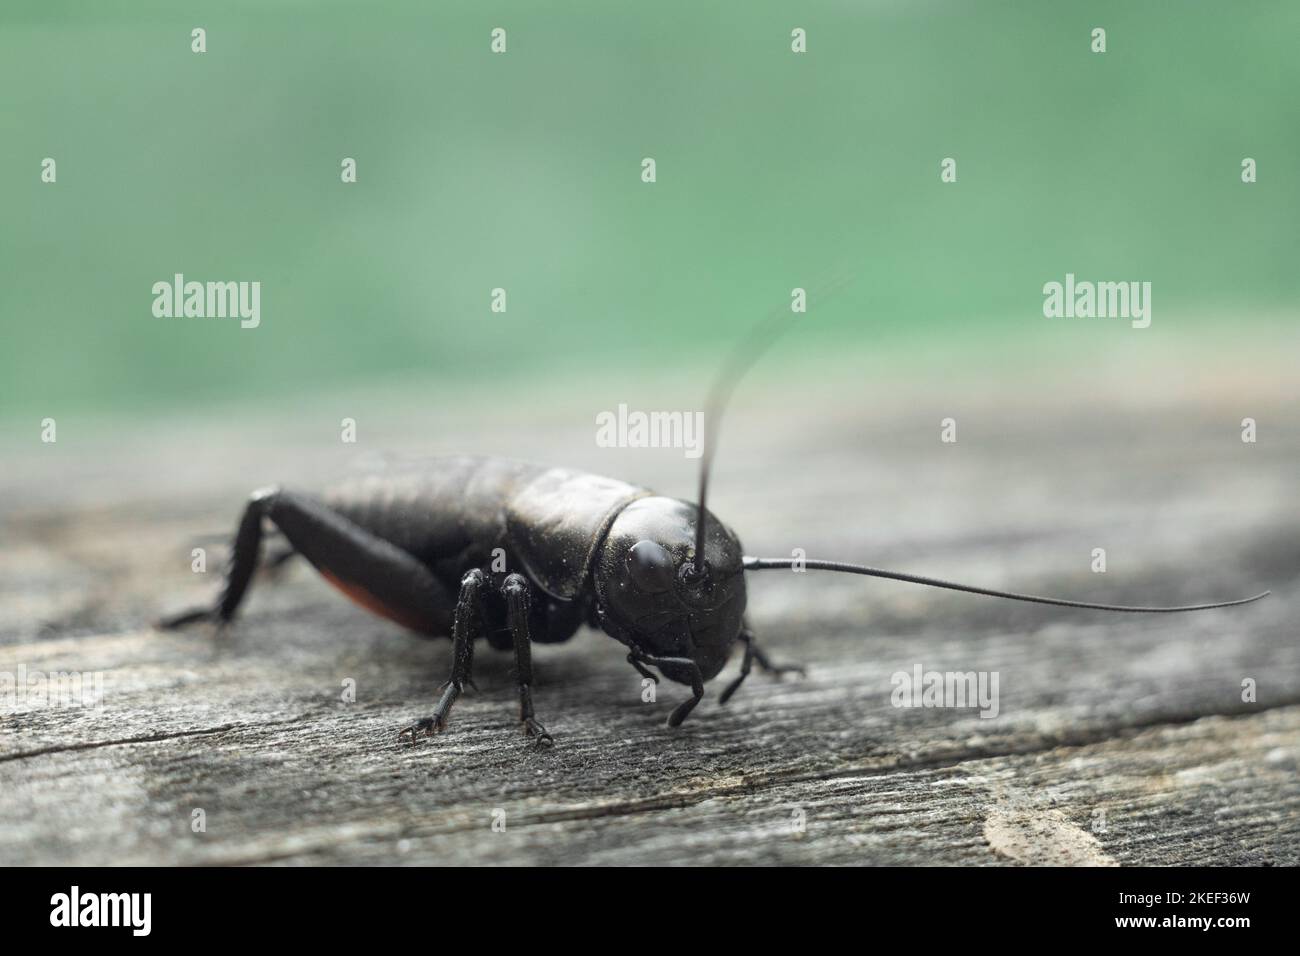 Insect shot close-up. Macro photo of a cricket. Stock Photo